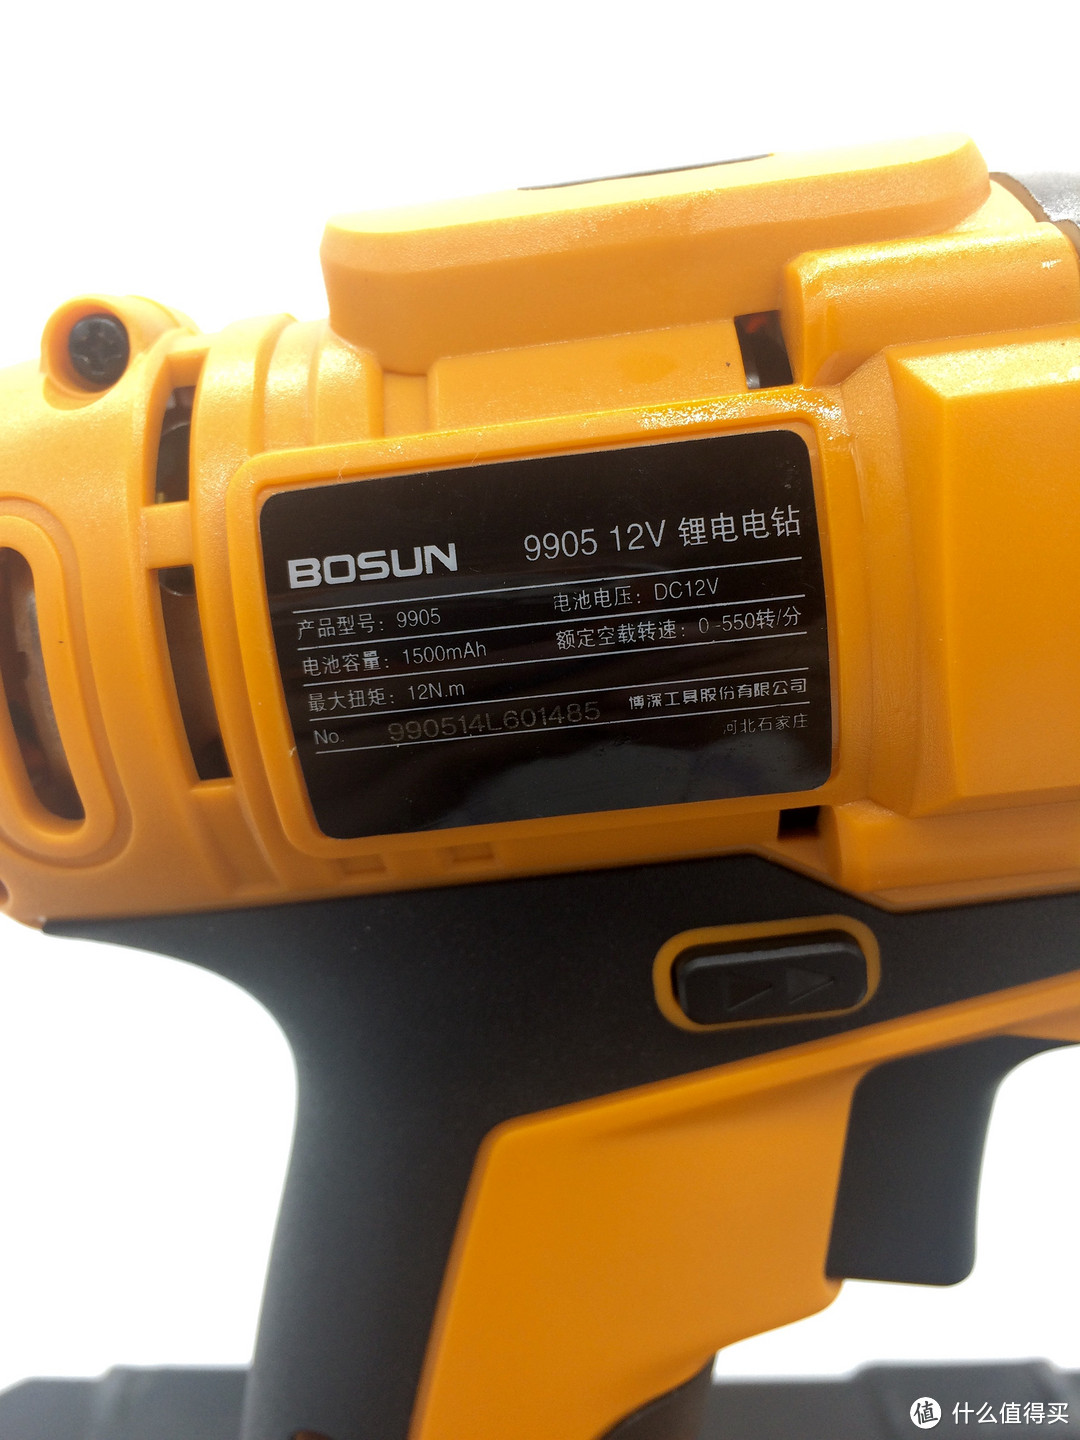 Bosun 博深 9905 12V锂电电钻 与博世 简单对比开箱